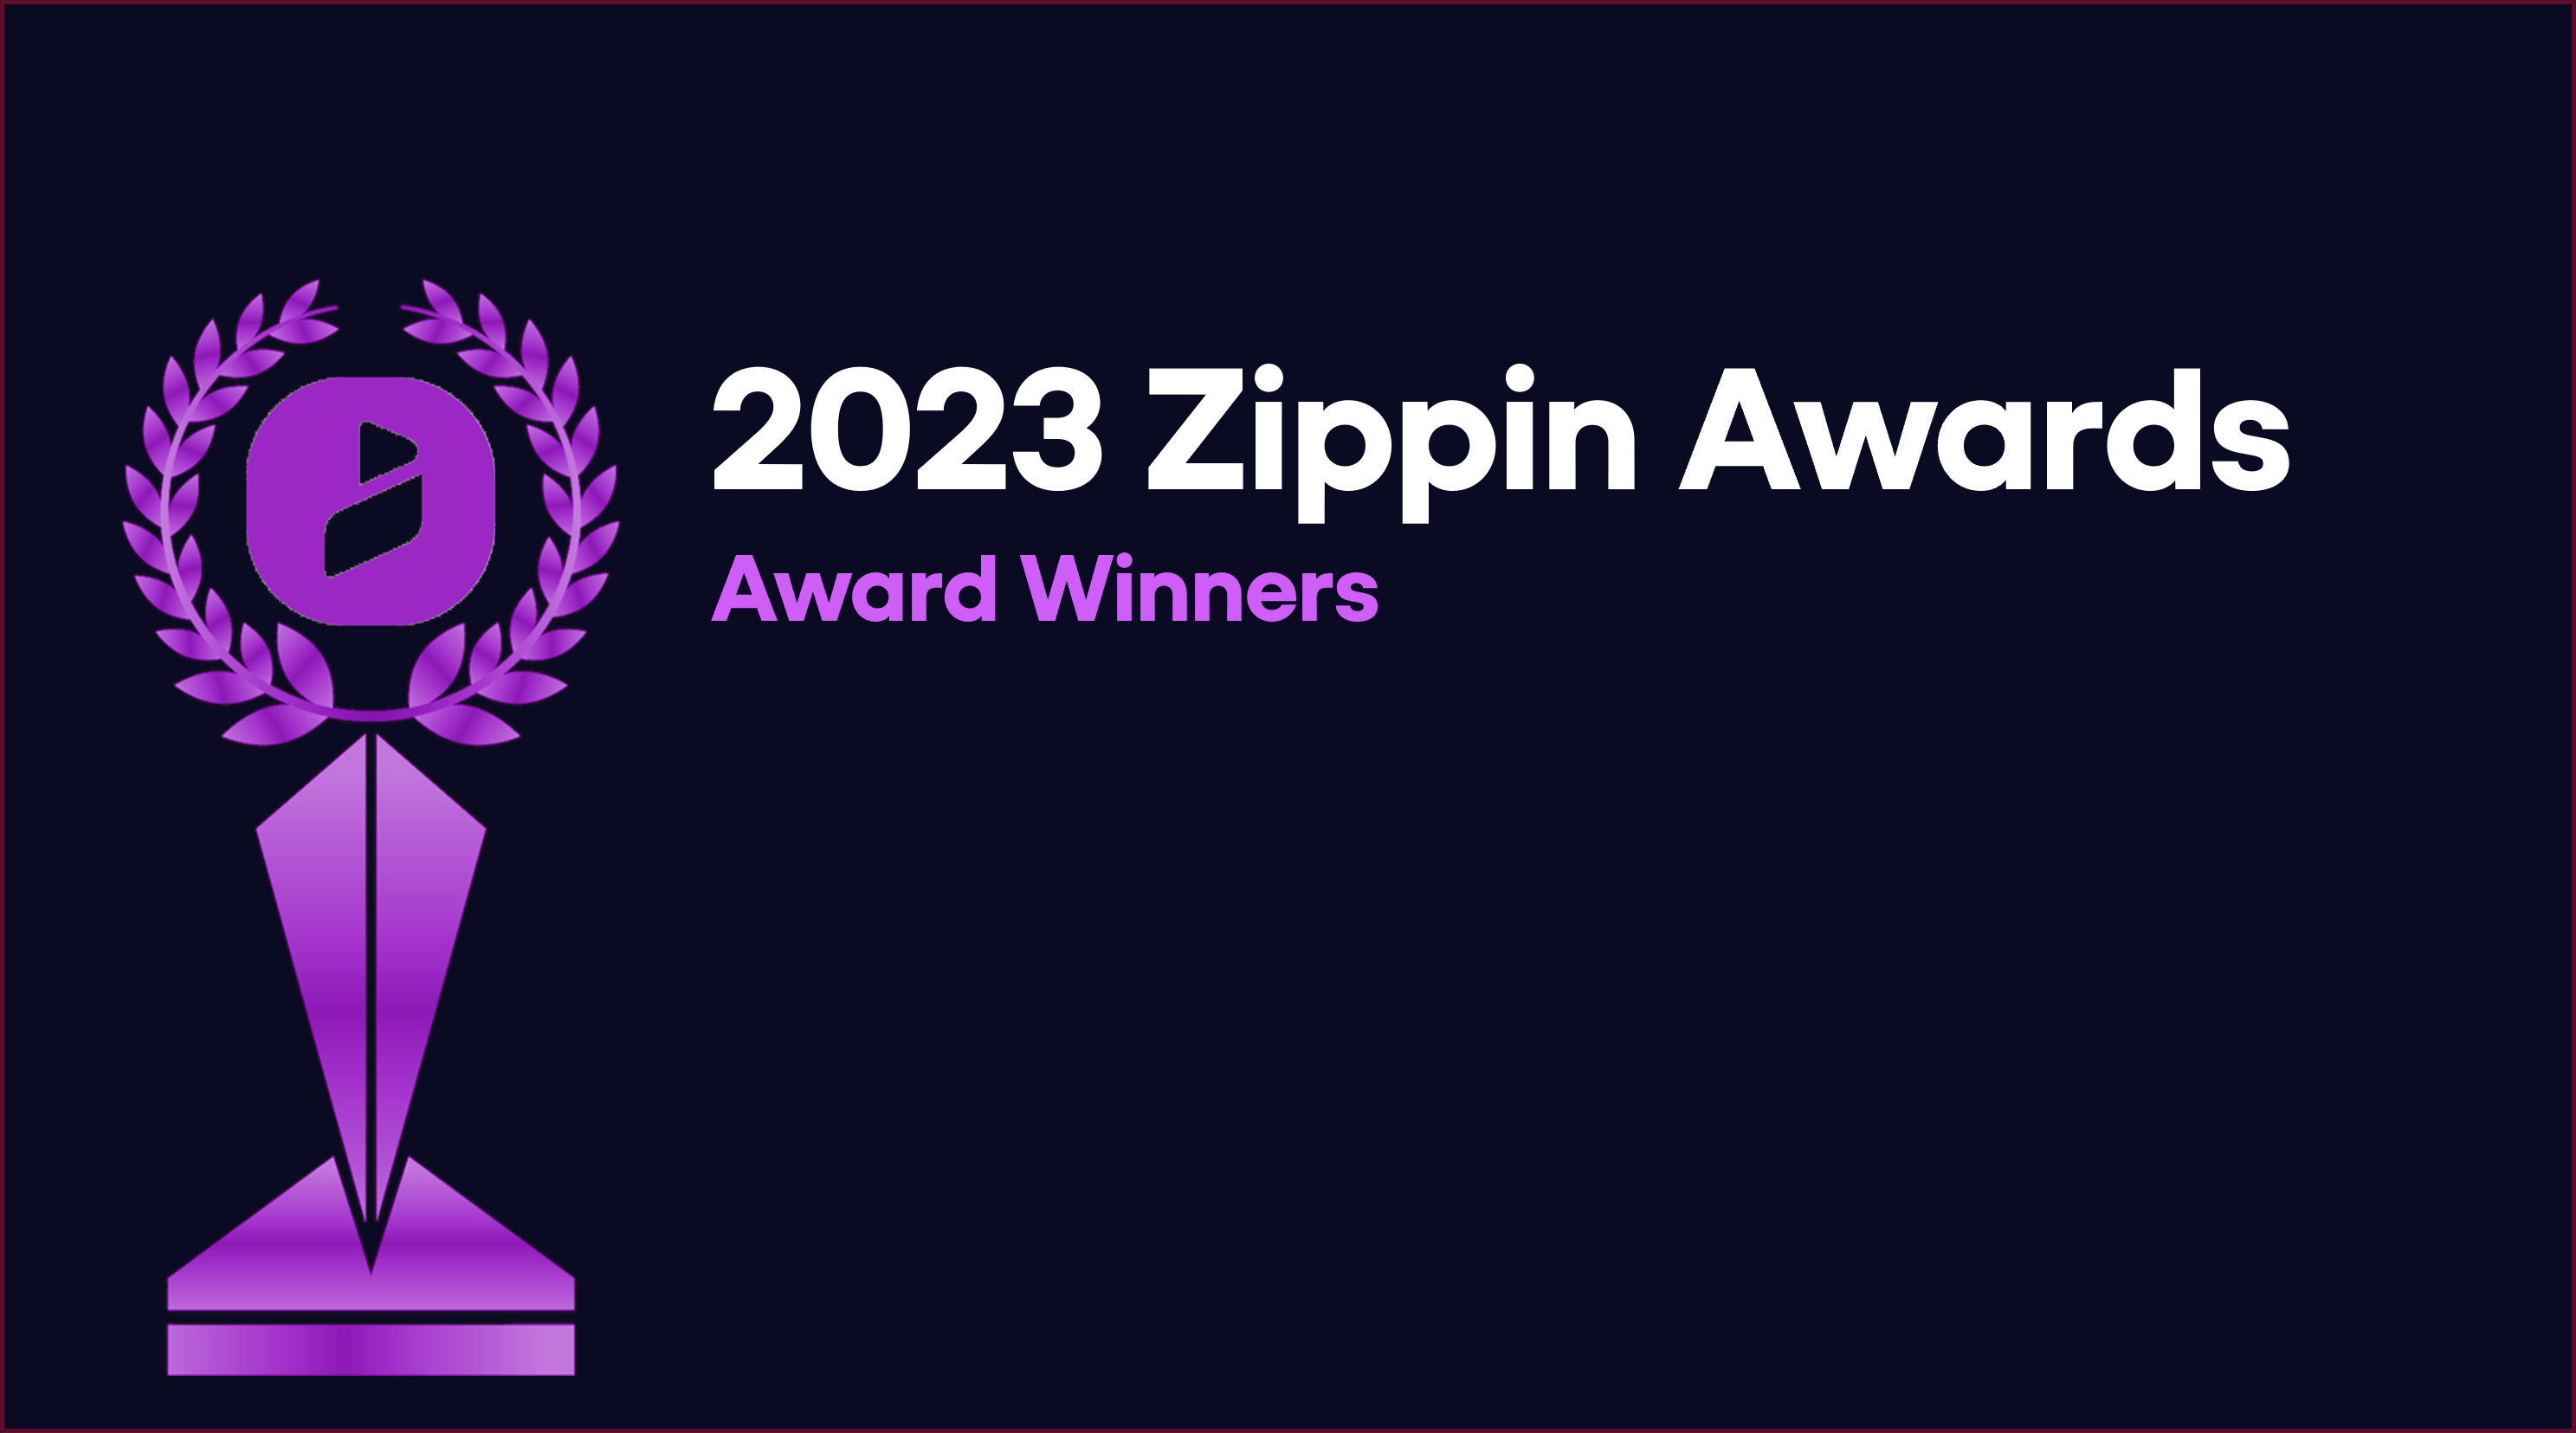 Zippin Awards Winners 2023